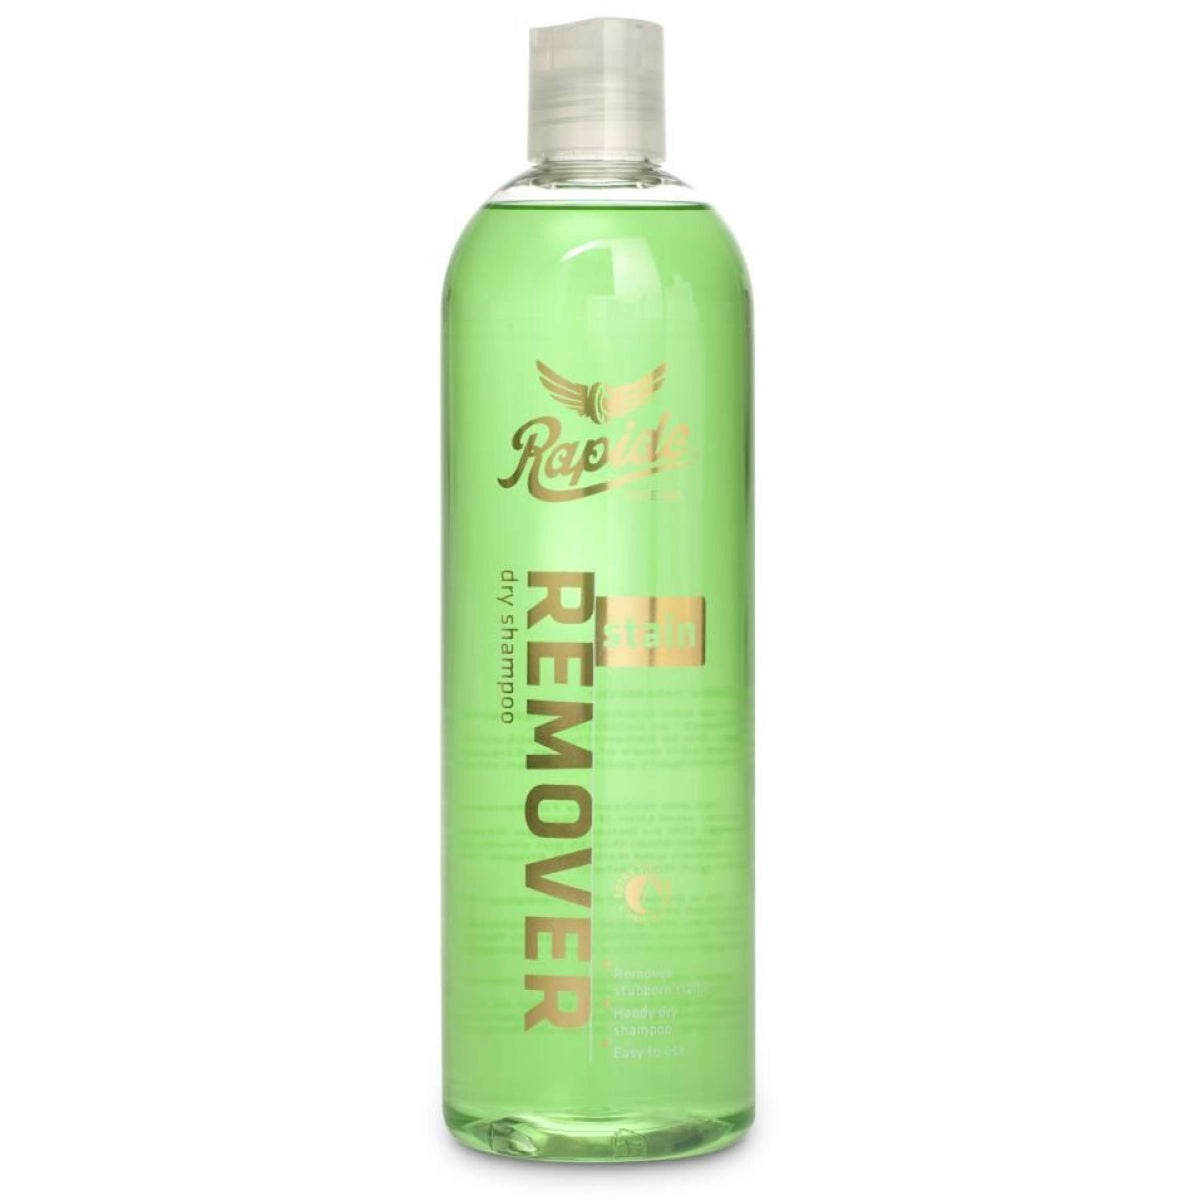 Rapide Dry Clean Shampoo